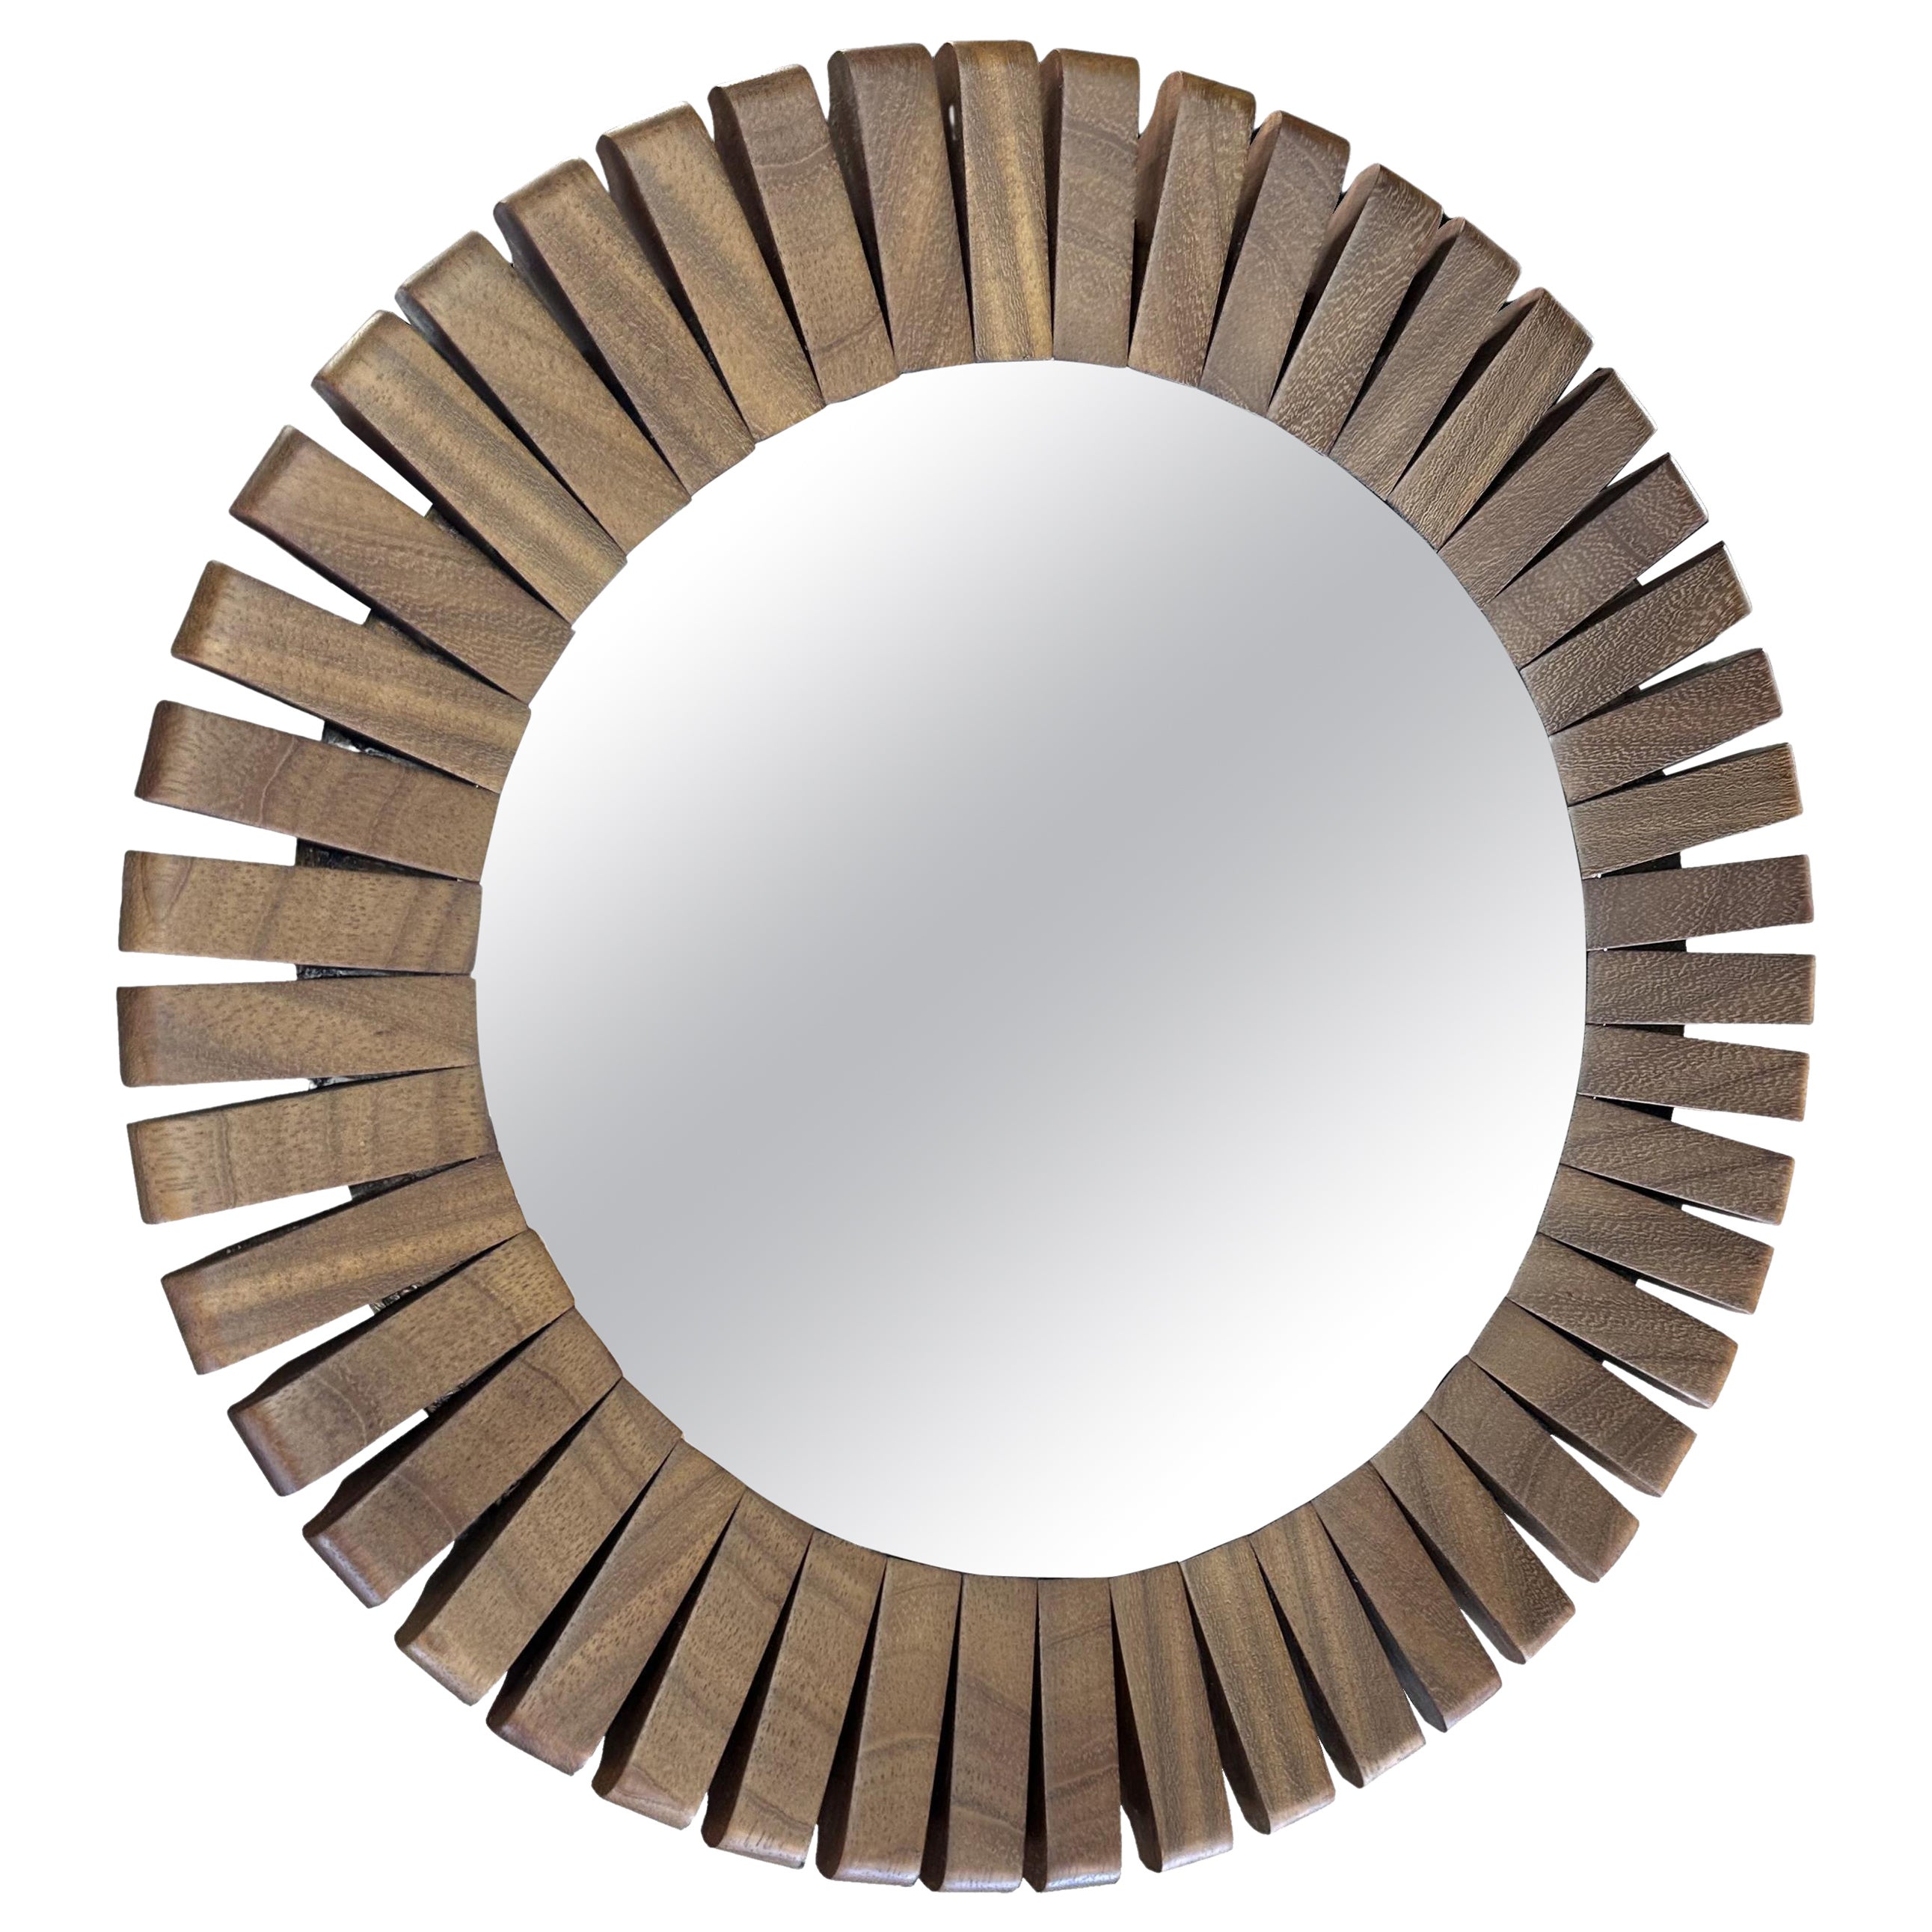 Segmented Frame Teak Circular Wall Mirror